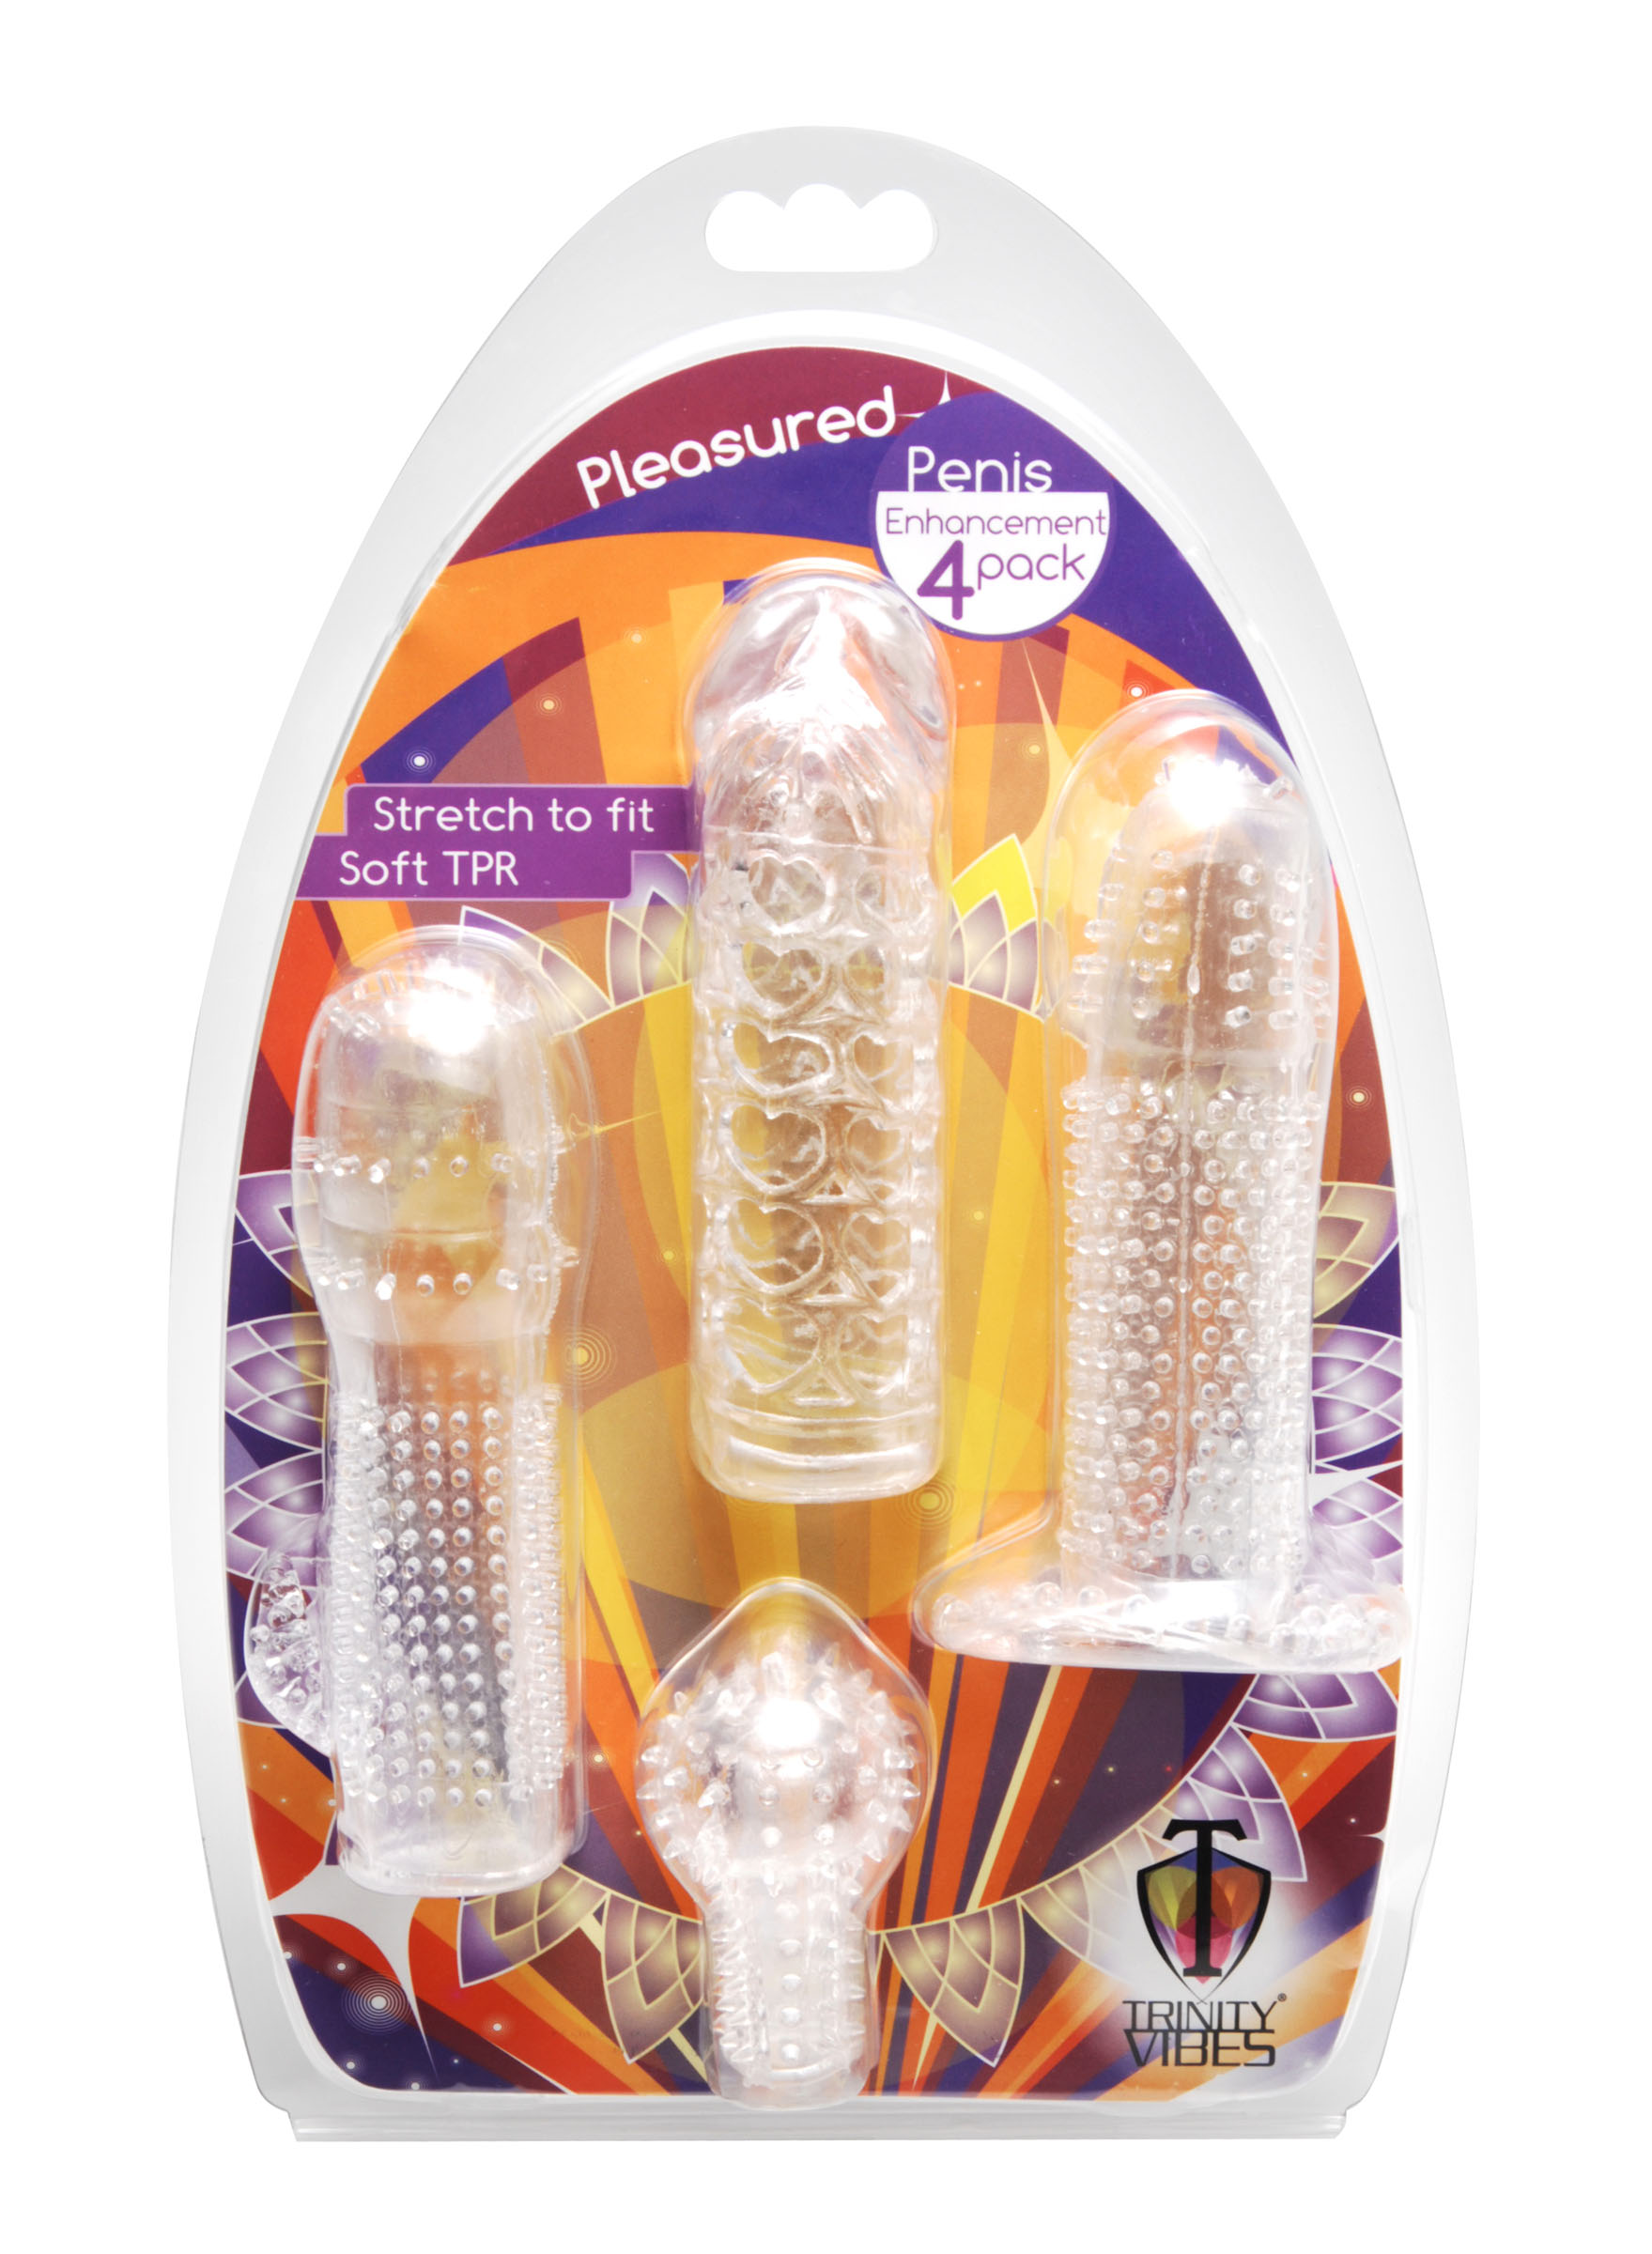 pleasure penis enhancement  pack 